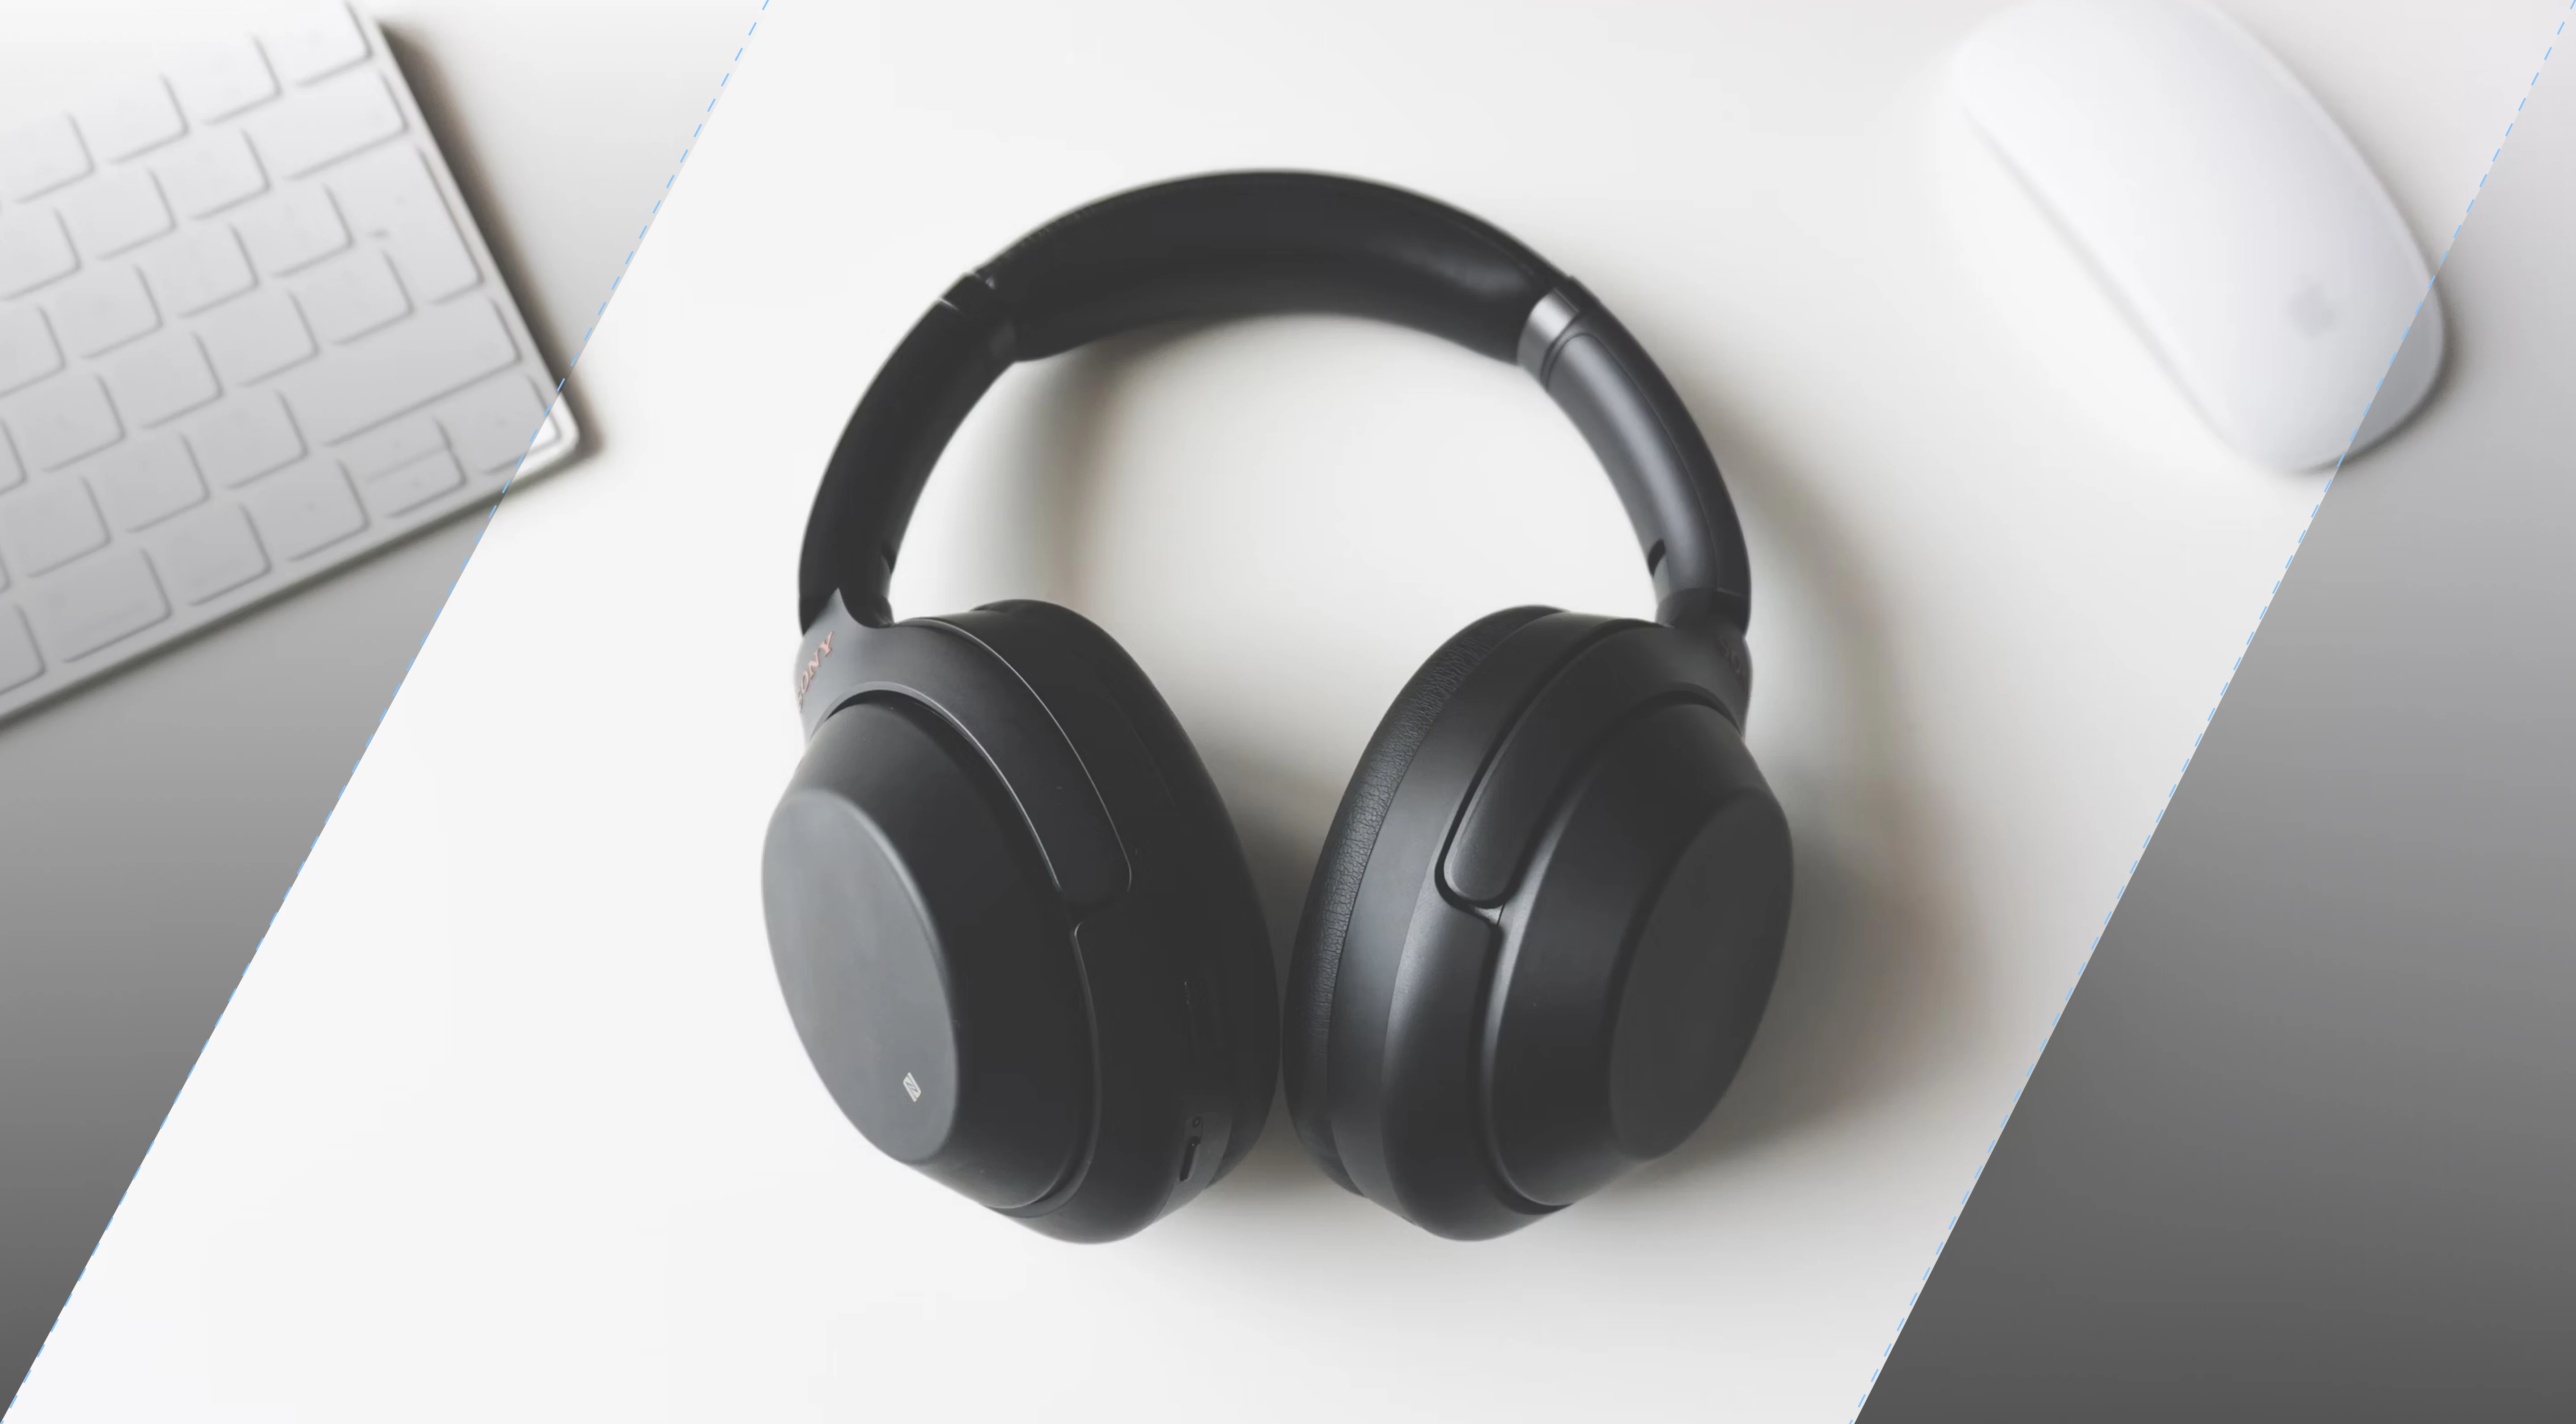 What is Haptic Feedback in Headphones?